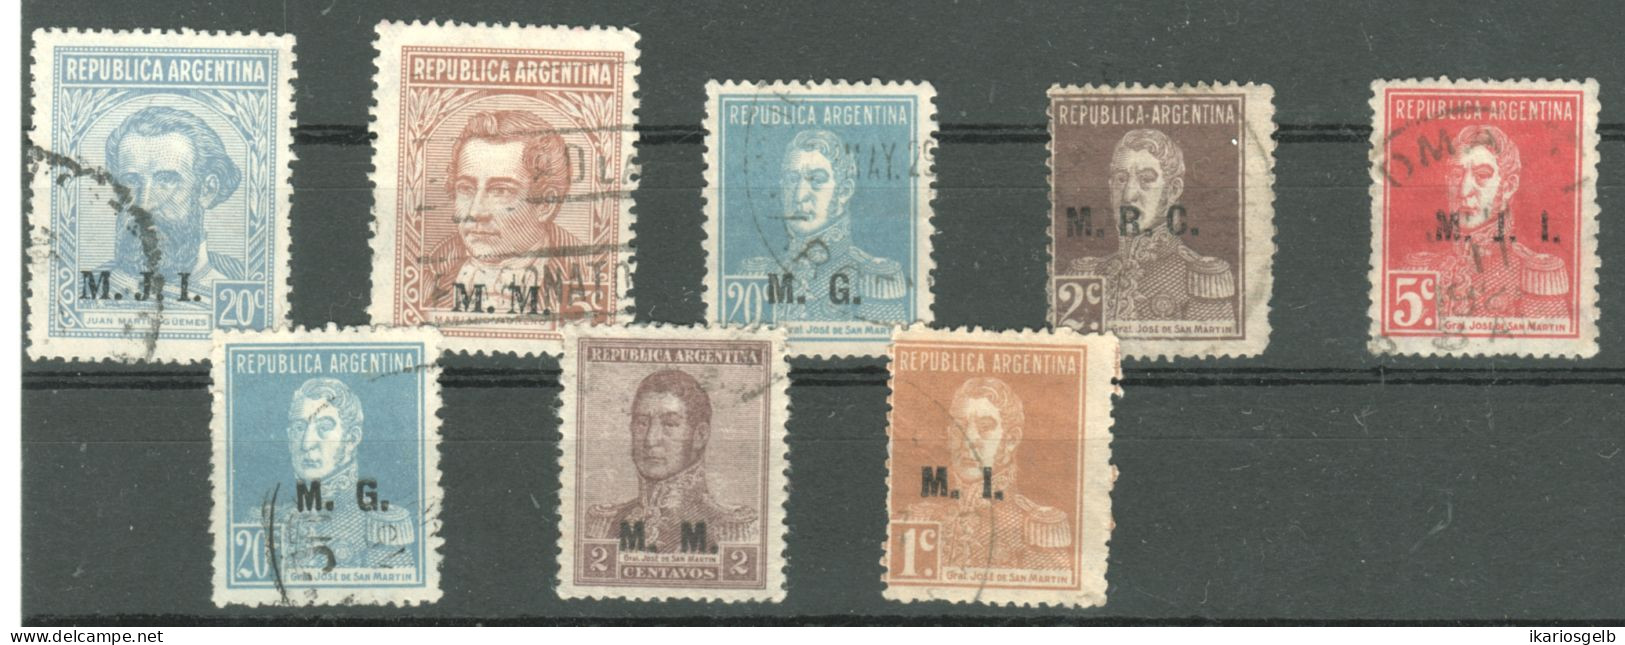 ARGENTINIEN Argentina ~1924 Lot 8 Marken + Ministerial-Aufdrucke M.I.I. - M.M. - M.G. - M.I. = Ministry Overprints - Oficiales